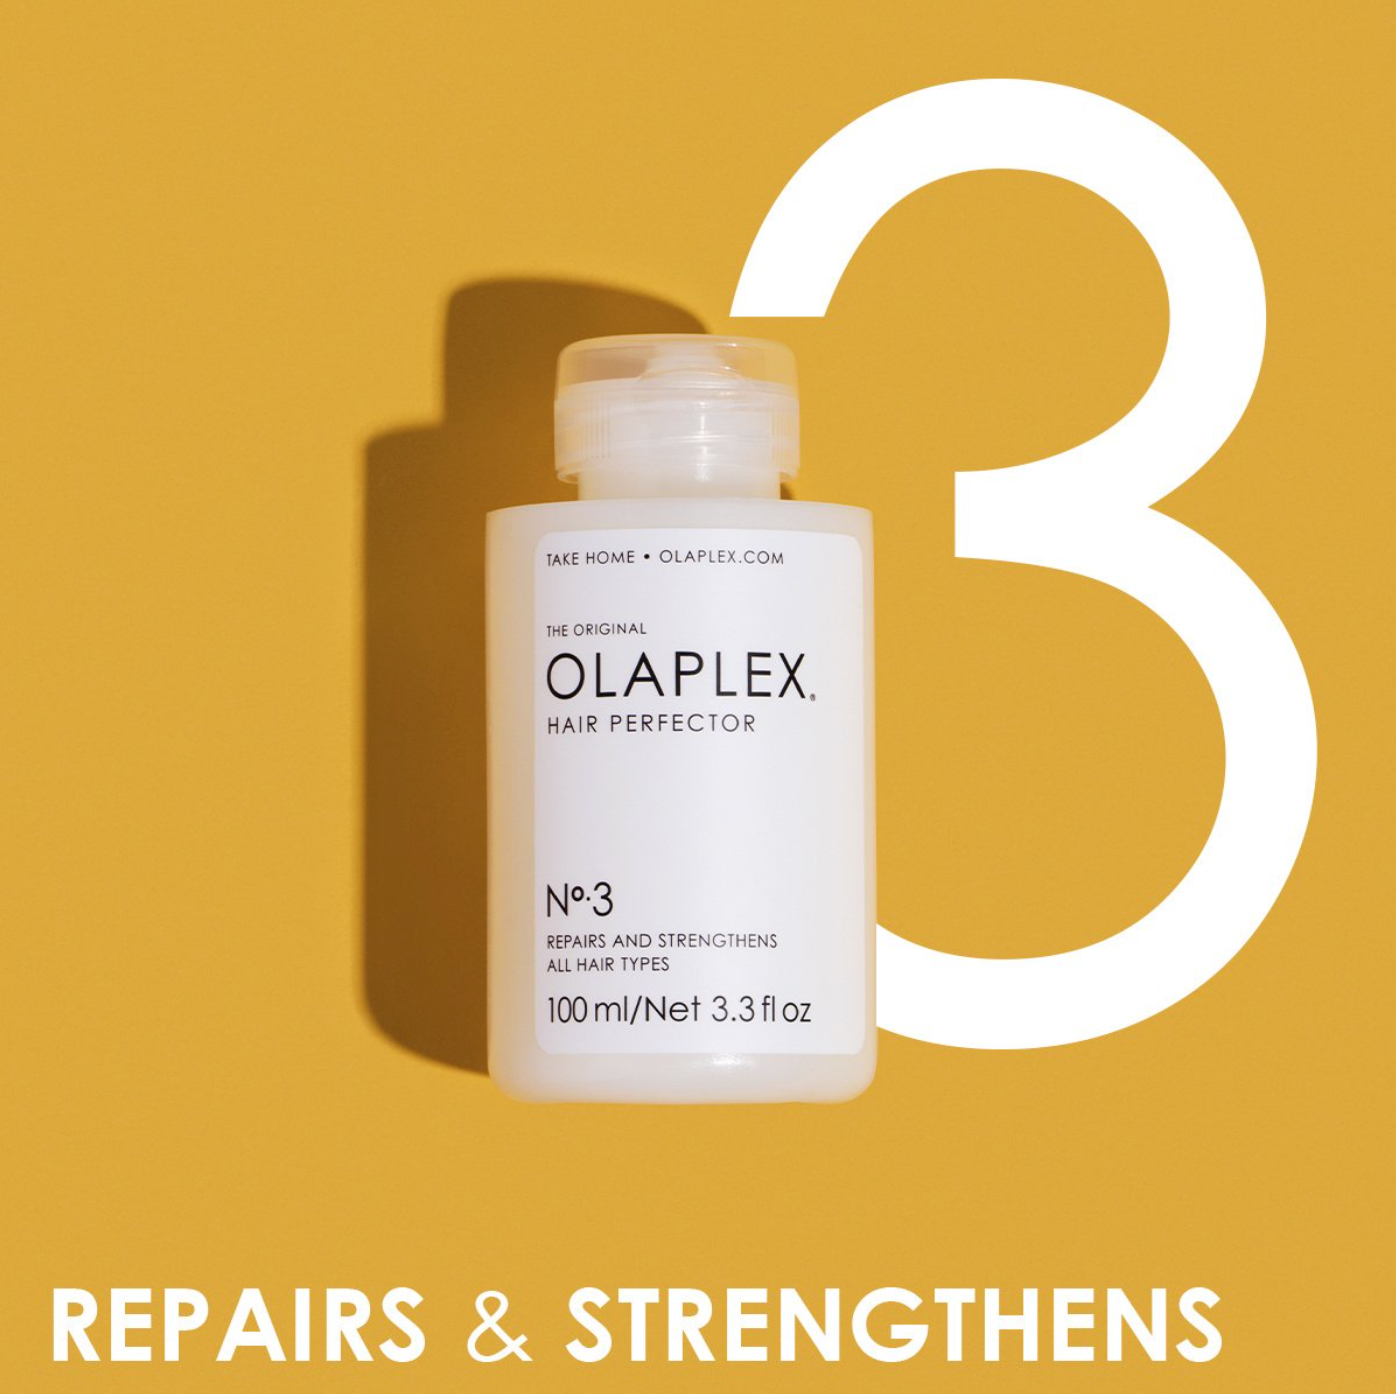 OLAPLEX No.3 Hair Perfector repairs &amp; strengthens 